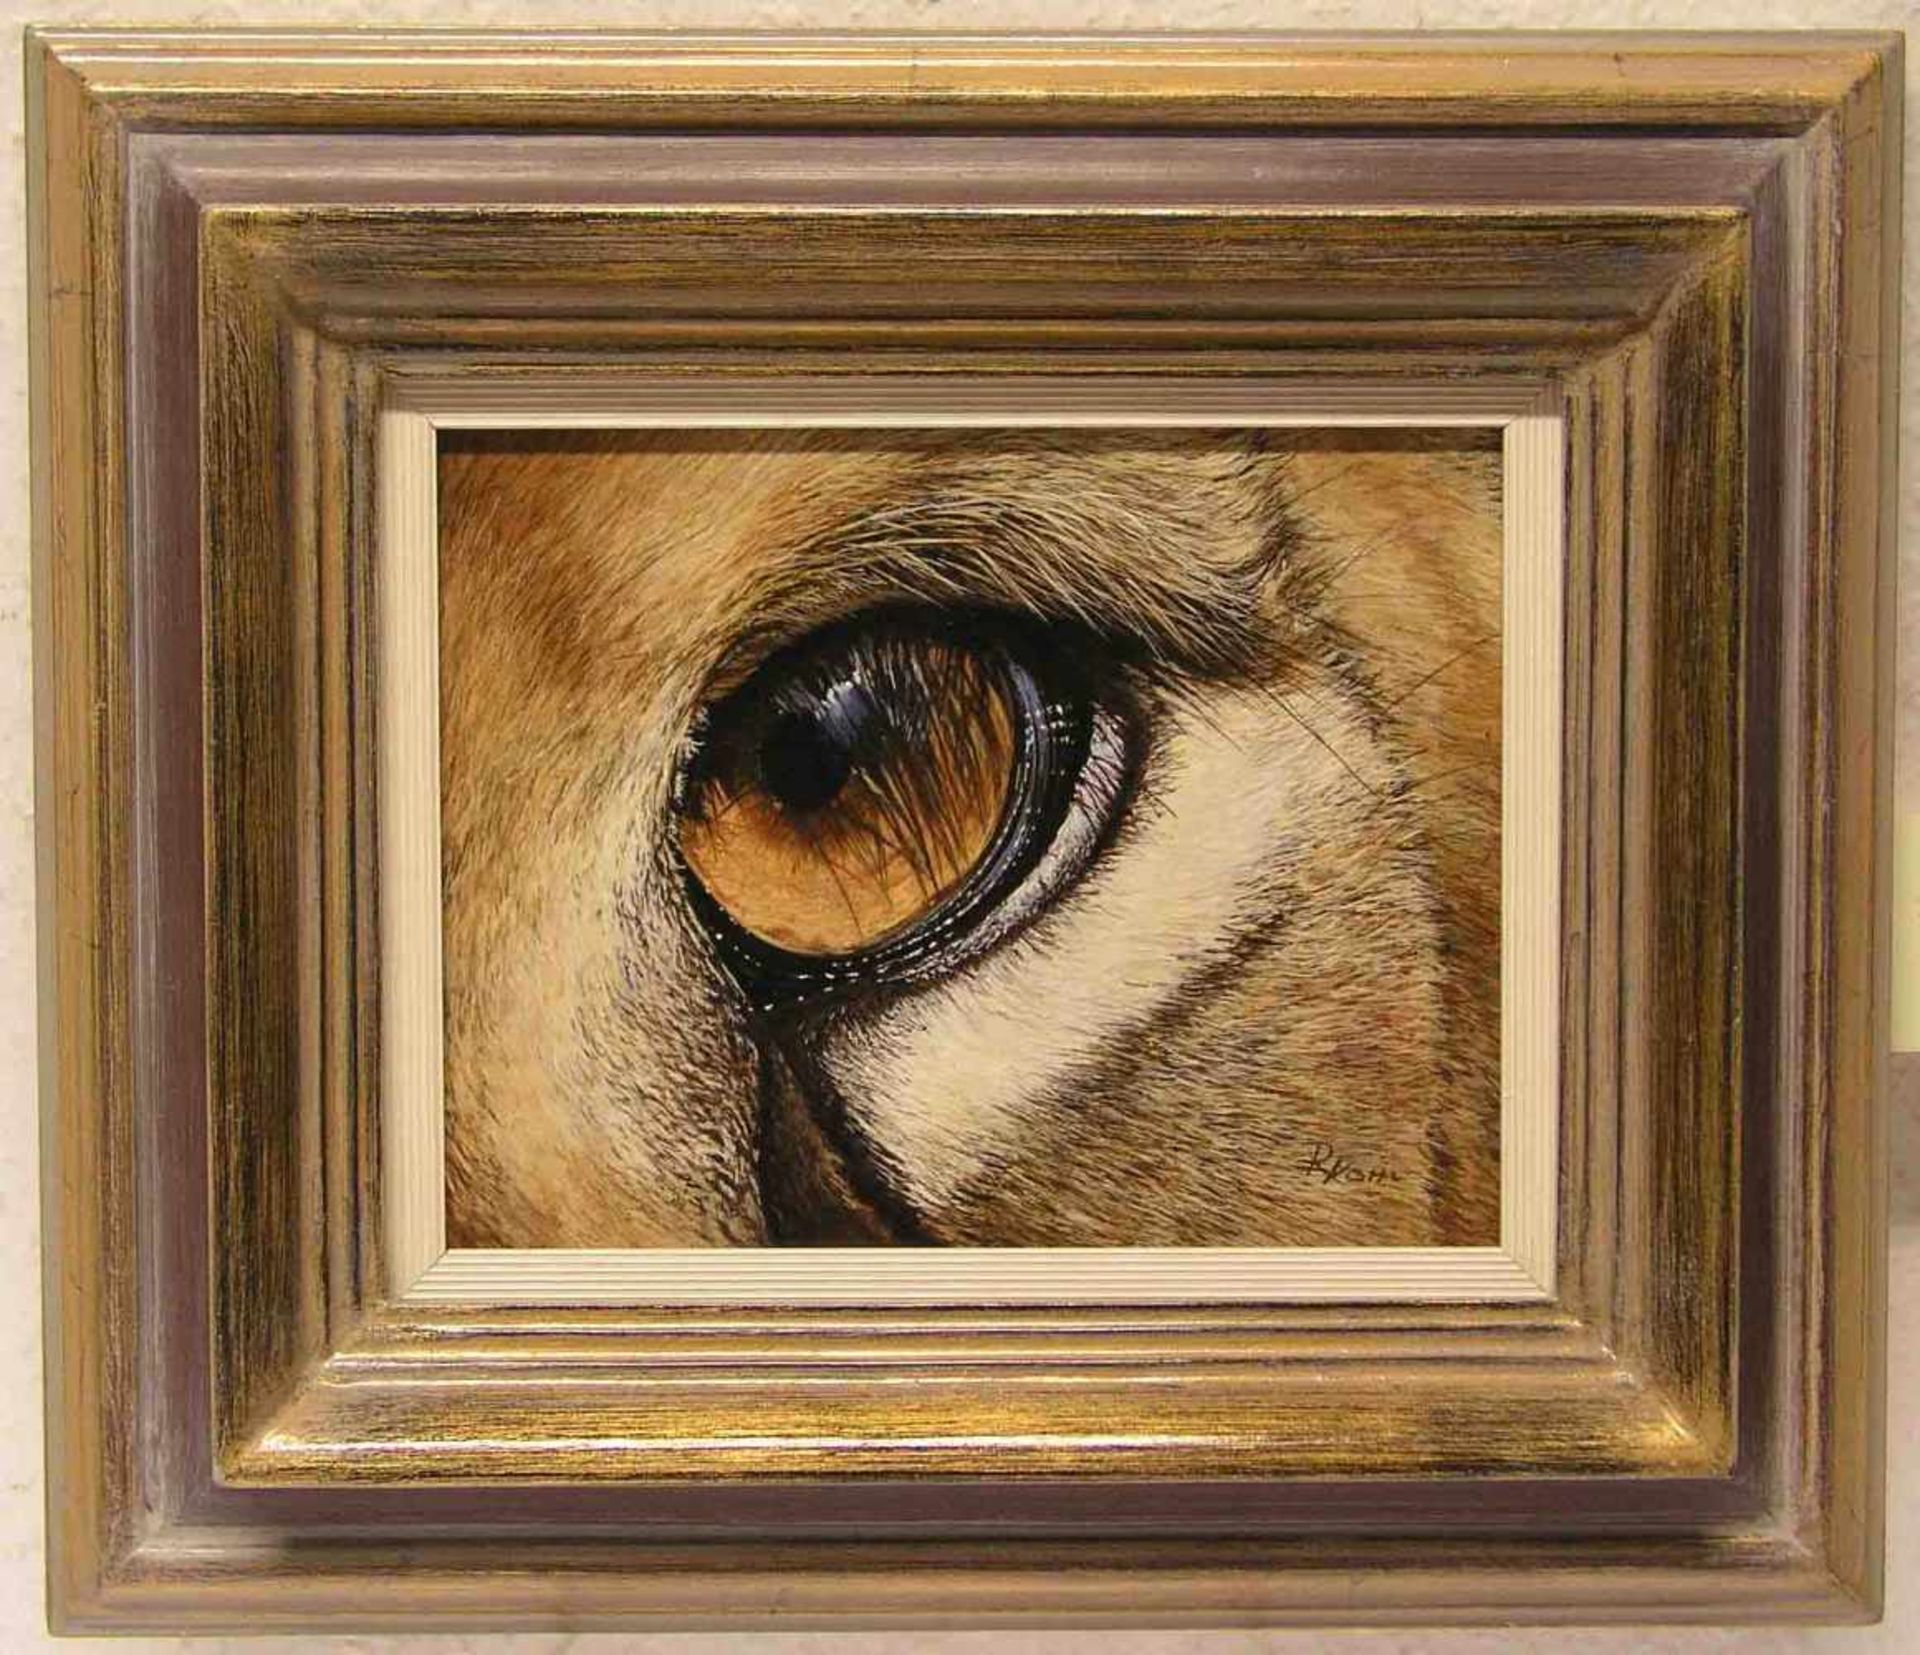 Kohl, Rudi (geb. 1964 in Trier), Tiermaler: "Auge eines Wildtiers". Öl/Platte, signiert,